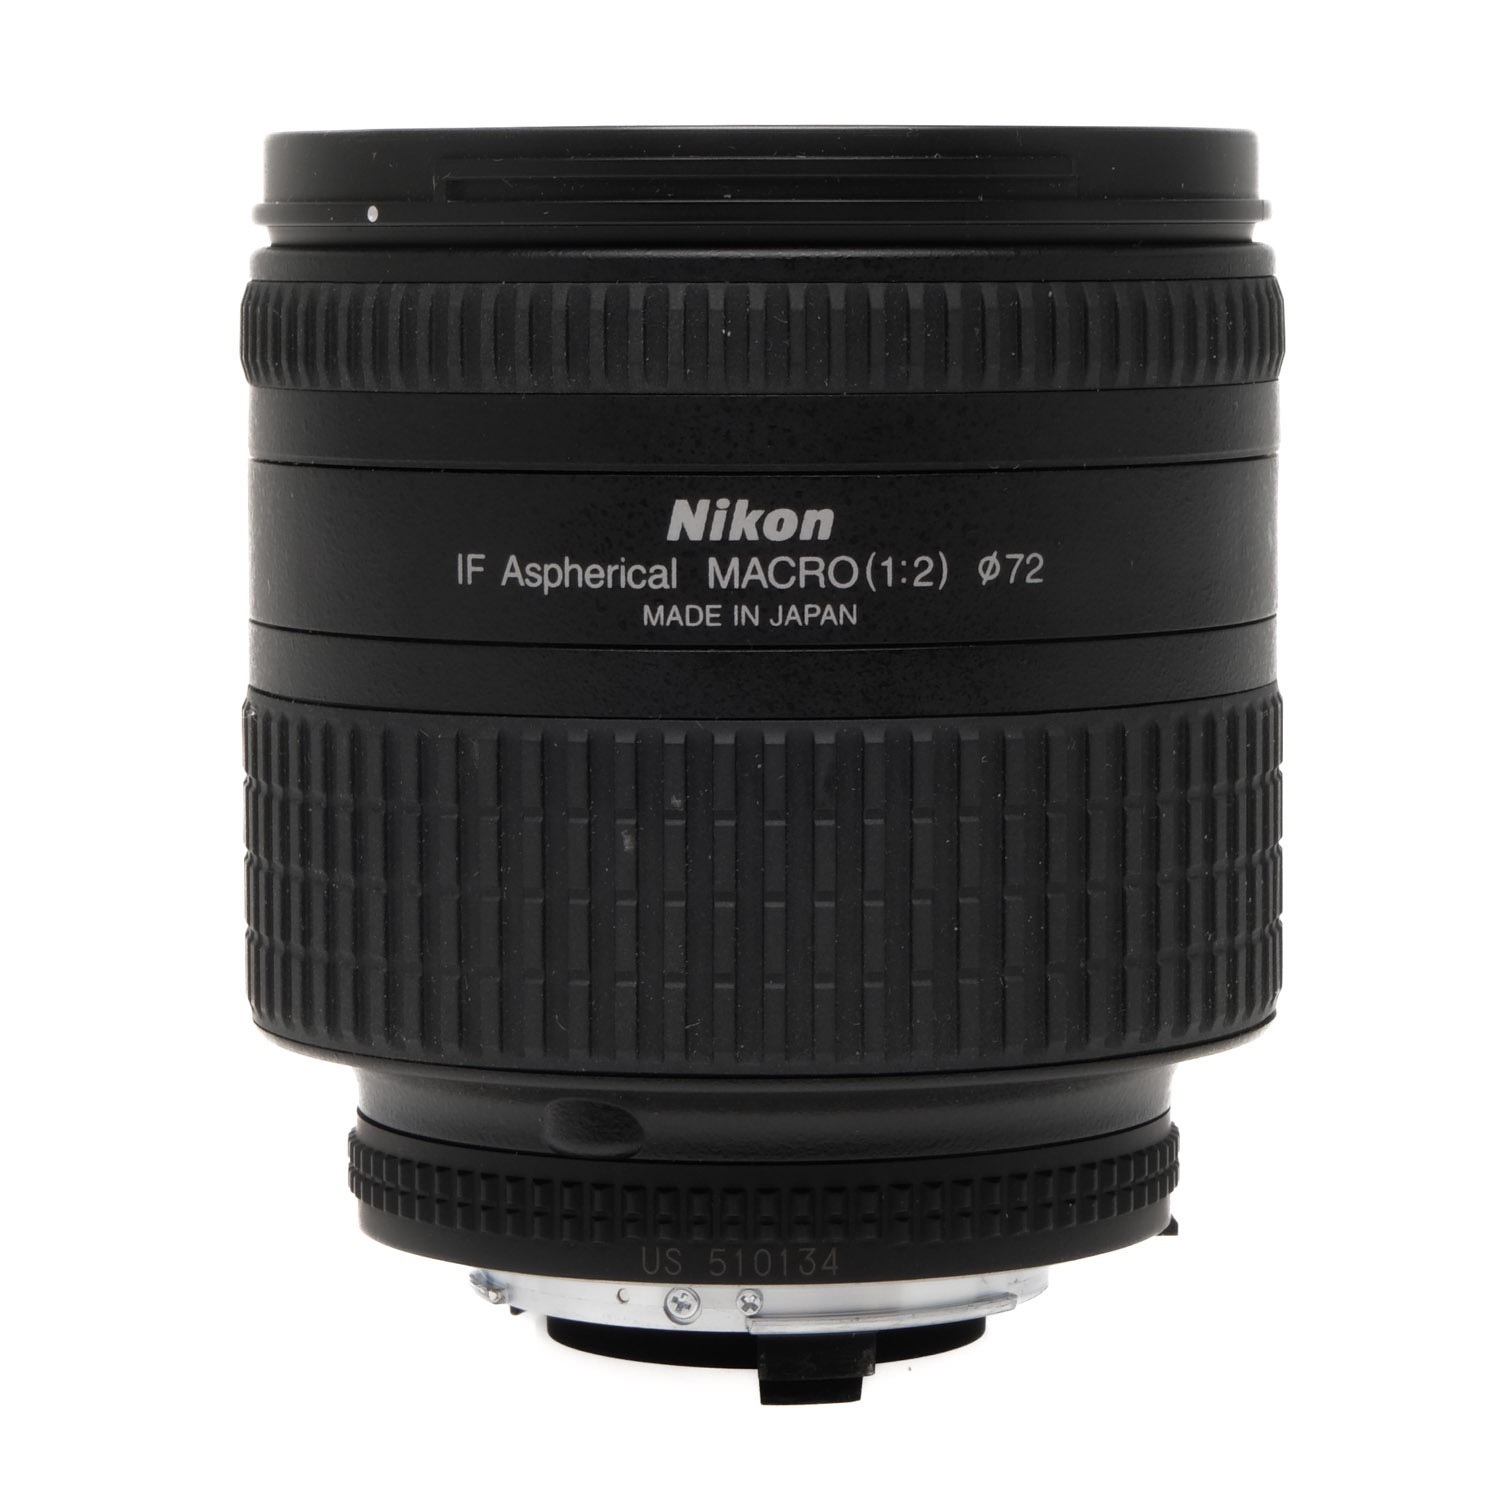 Nikon 24-85mm f2.8-4 D US510134